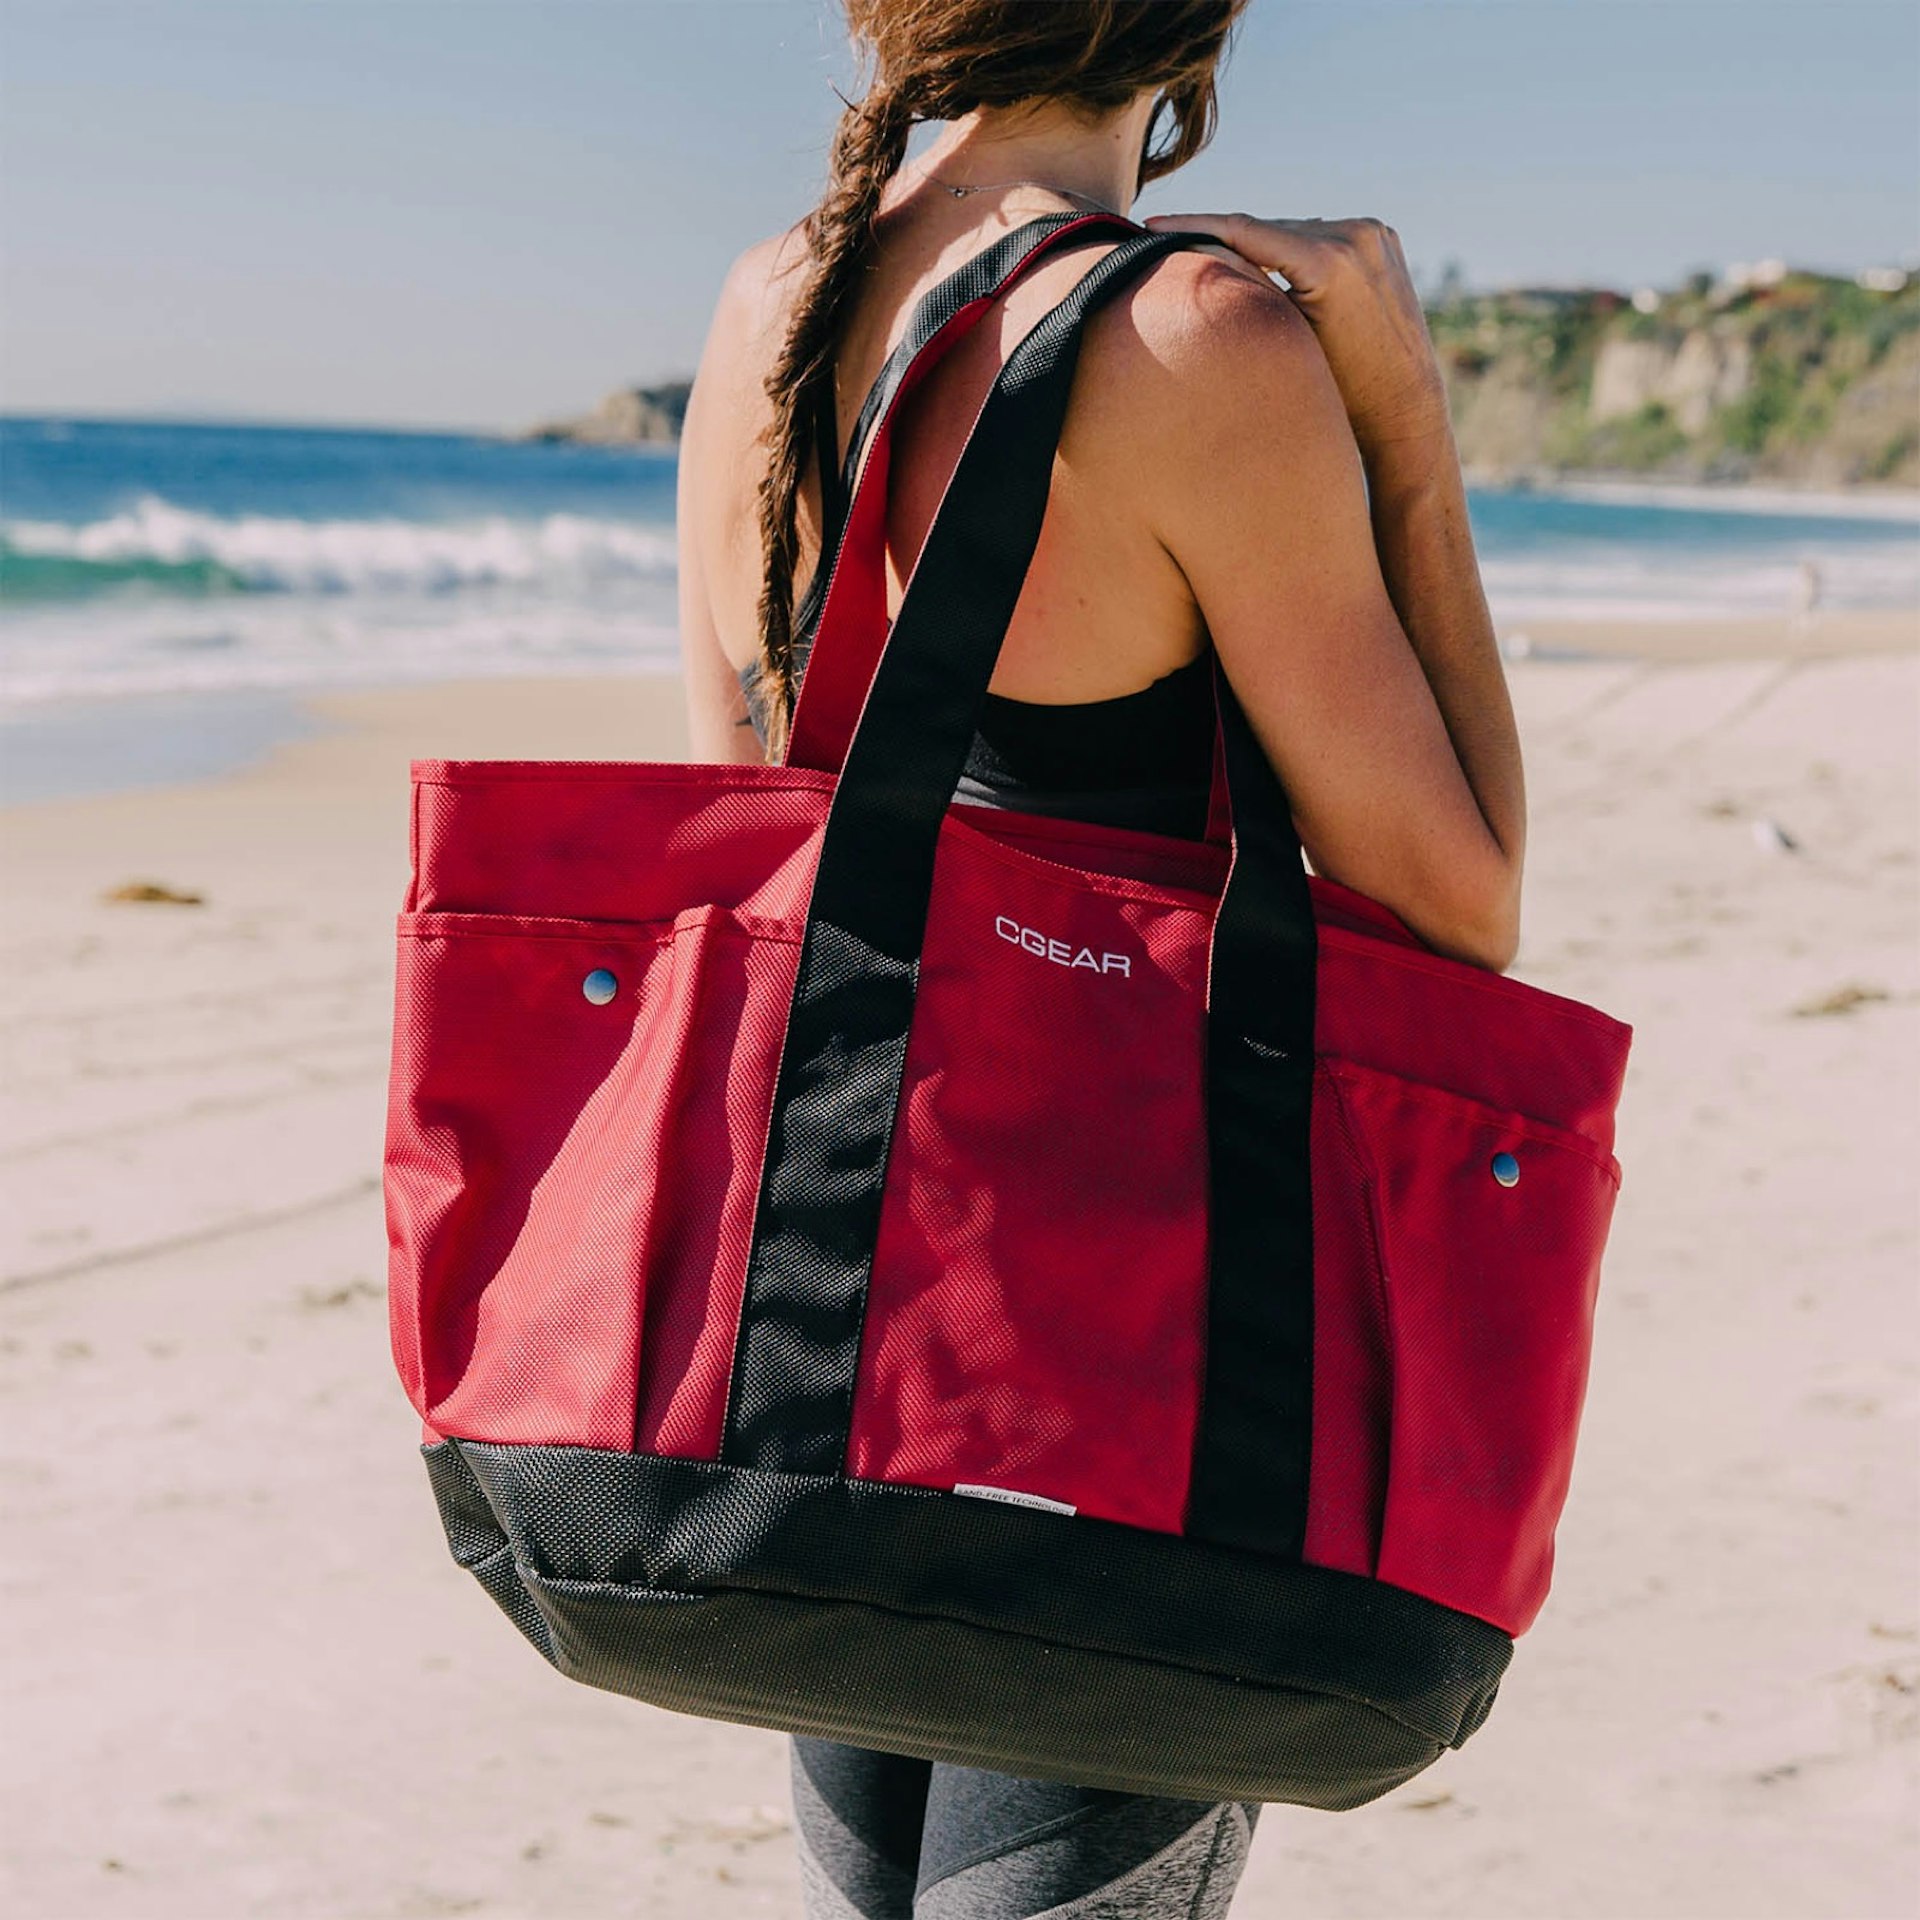 A woman holding a red tote bag on a beach; beach gear